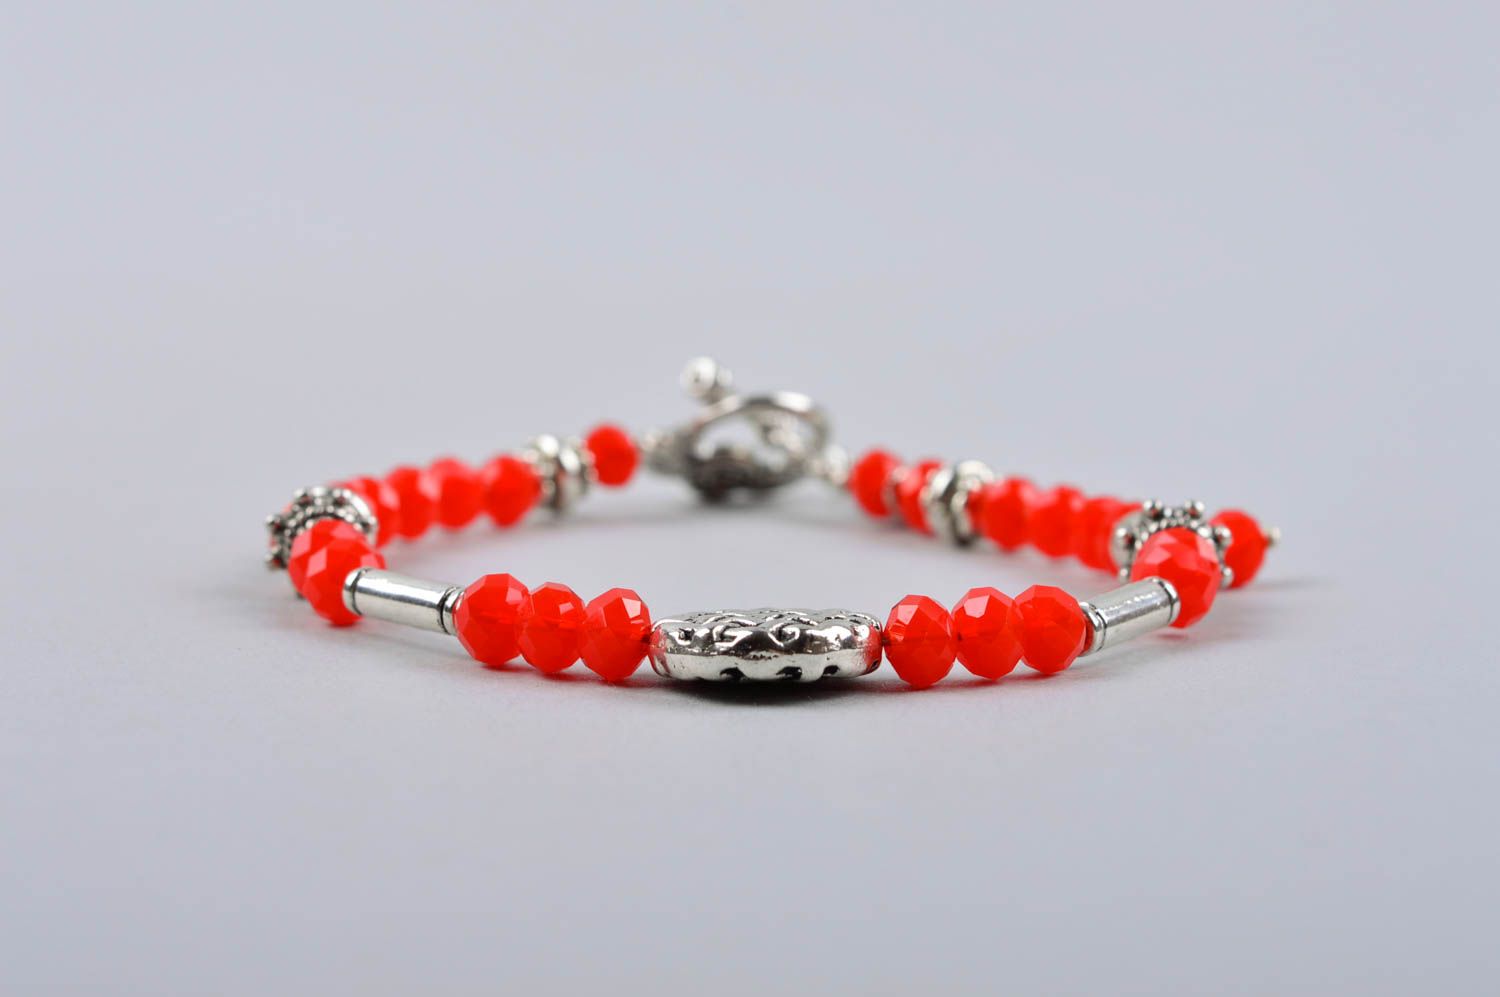 Handmade red beads bracelet with metal giraffe charm photo 4